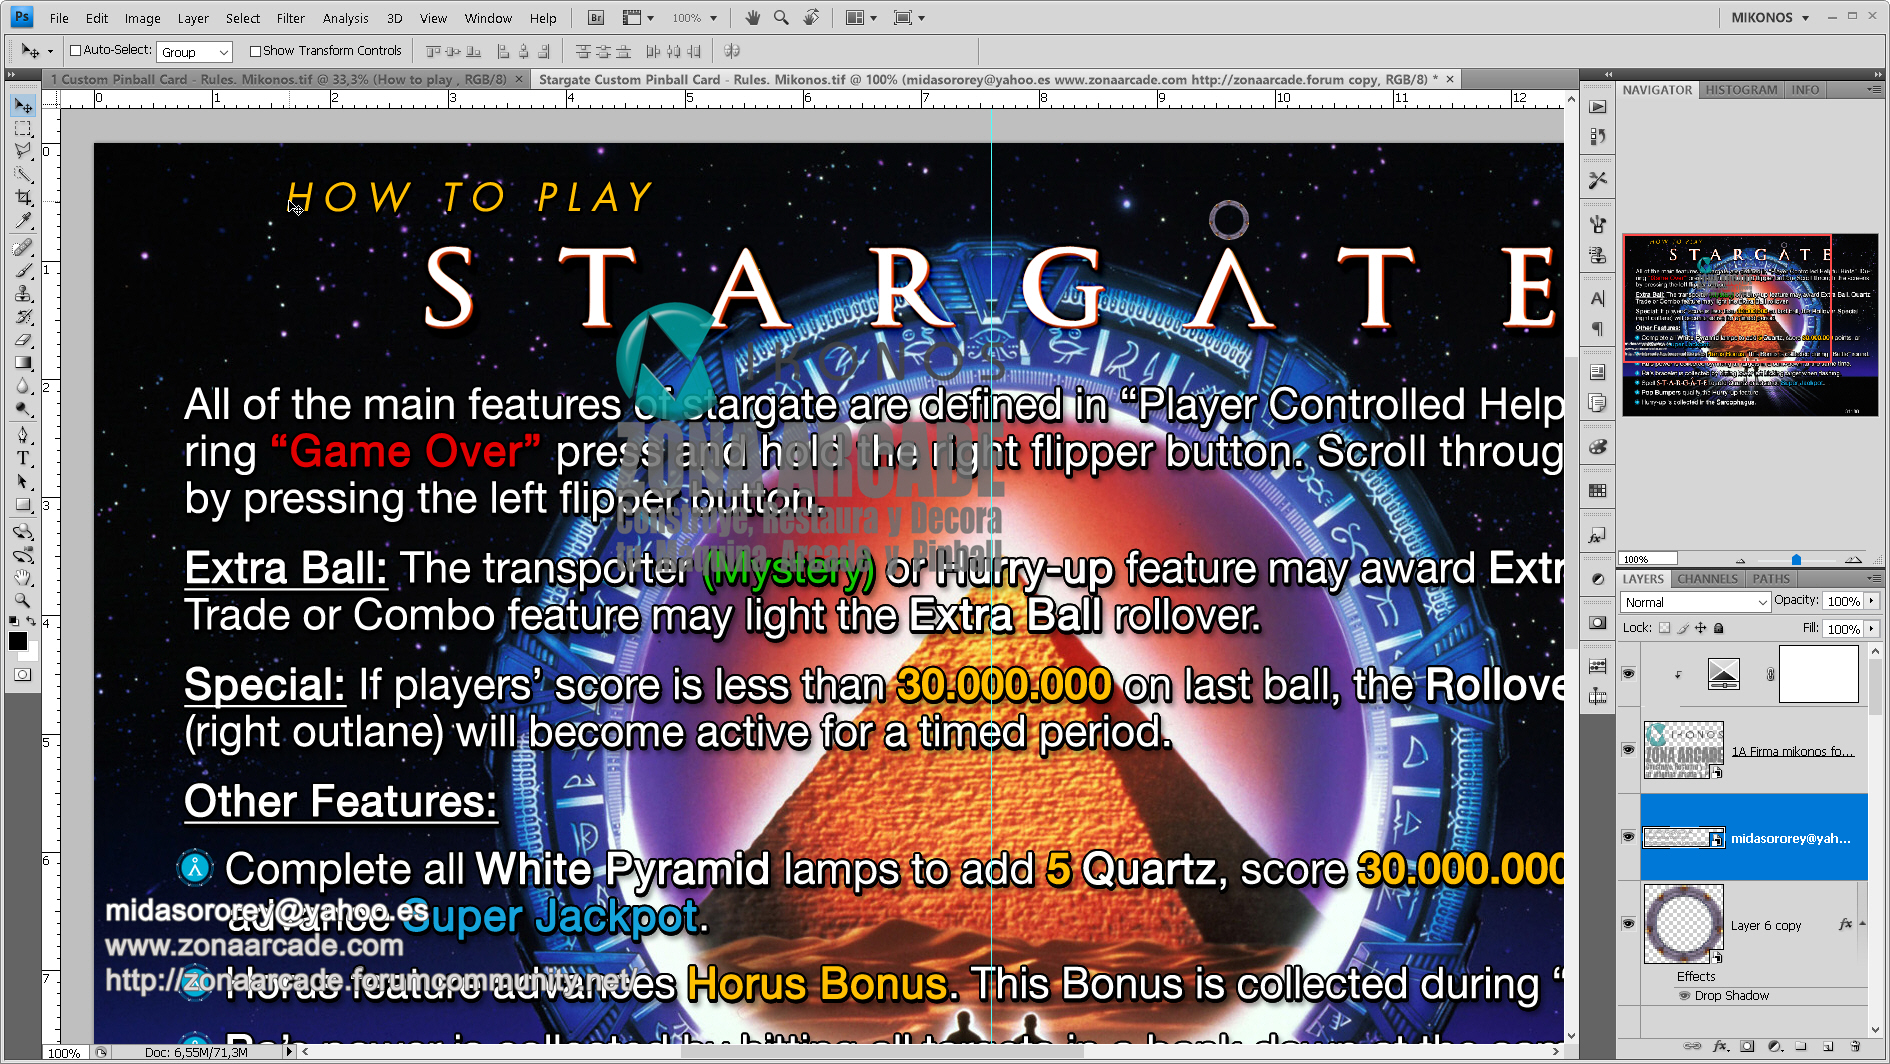 Stargate%20Pinball%20Card%20Customized%20-%20Rules.%20Mikonos2.jpg